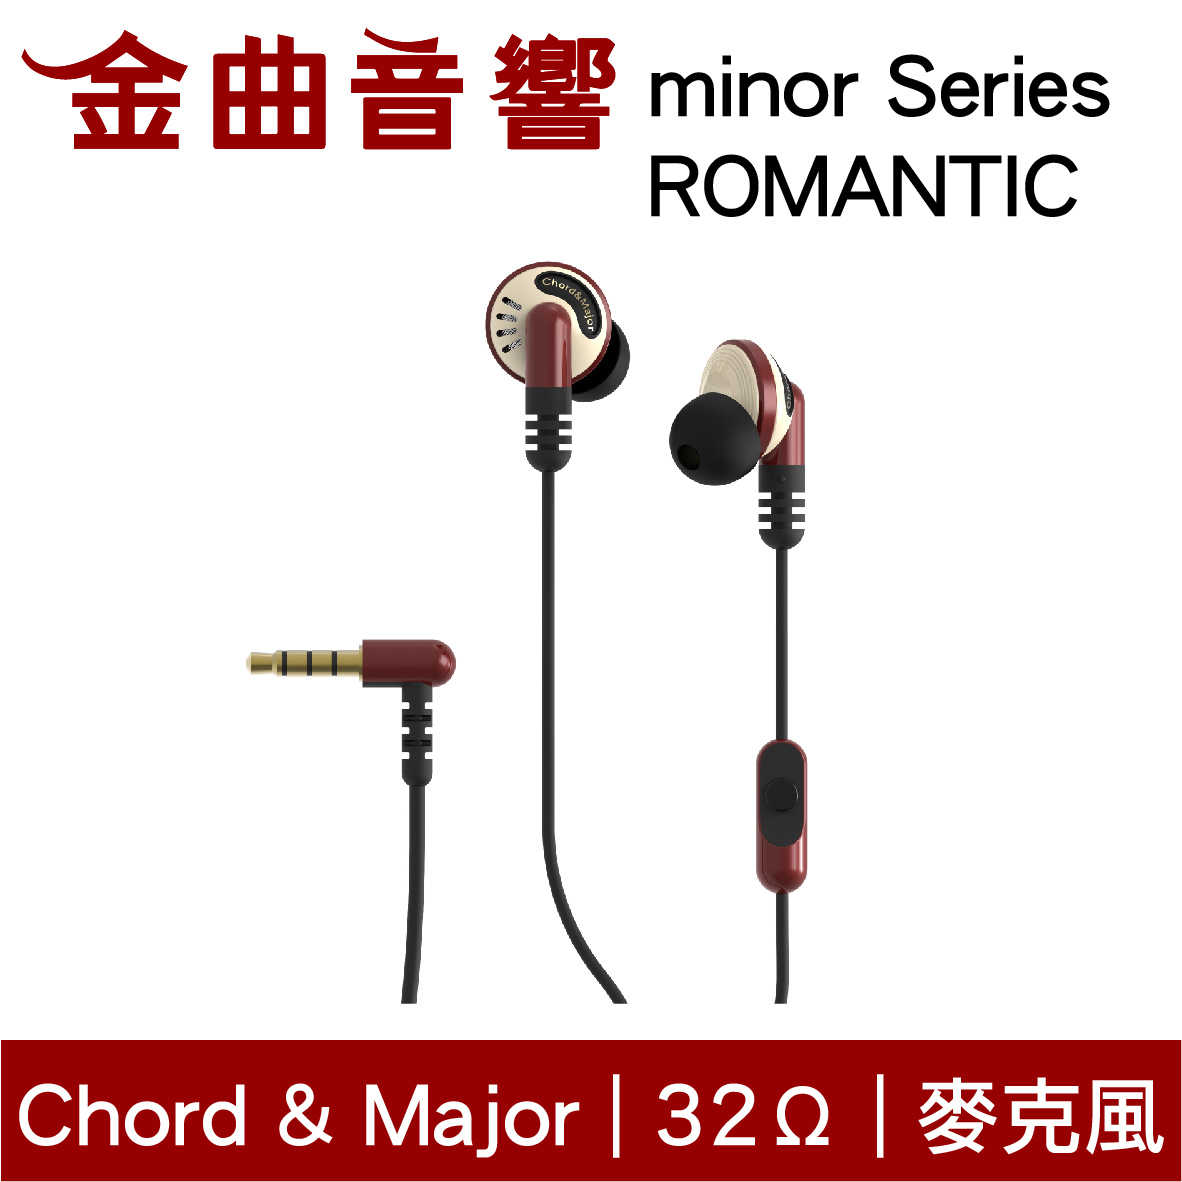 Chord & Major 小調性耳機 minor series 浪漫時代 通話 耳道式 耳機 | 金曲音響